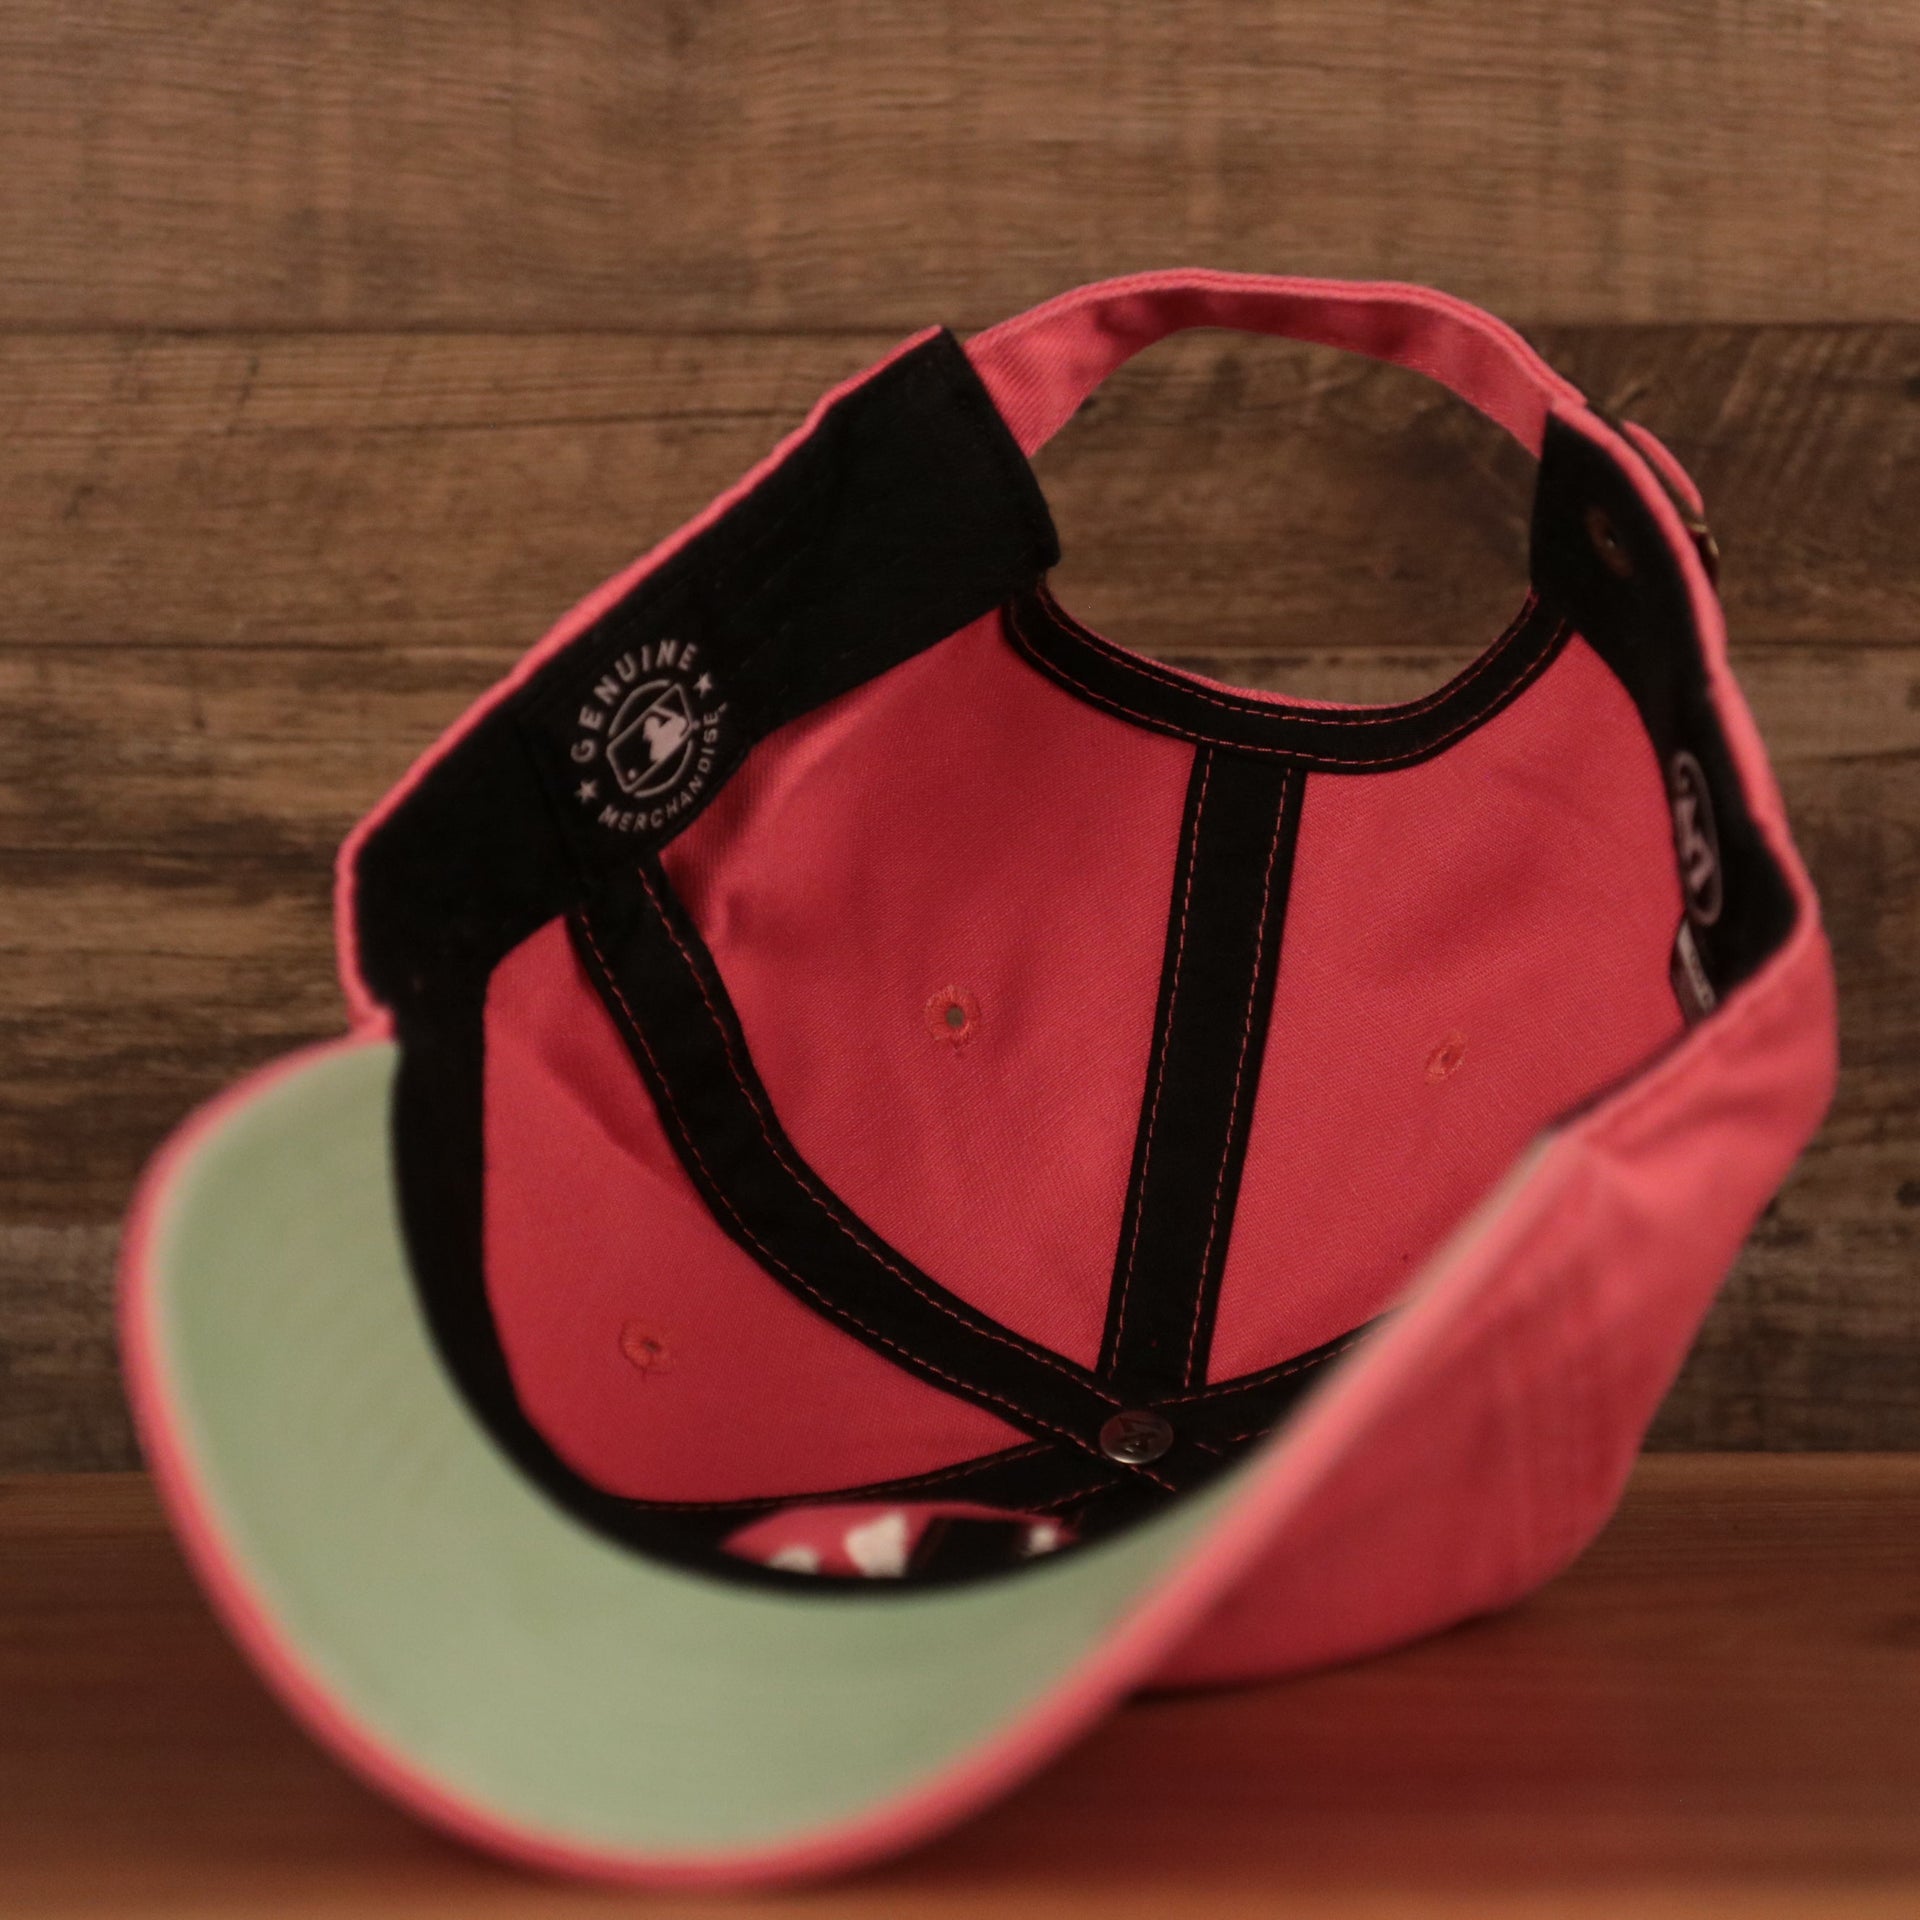 An inside look of the pink New York Yankees green brim bottom adjustable cap.